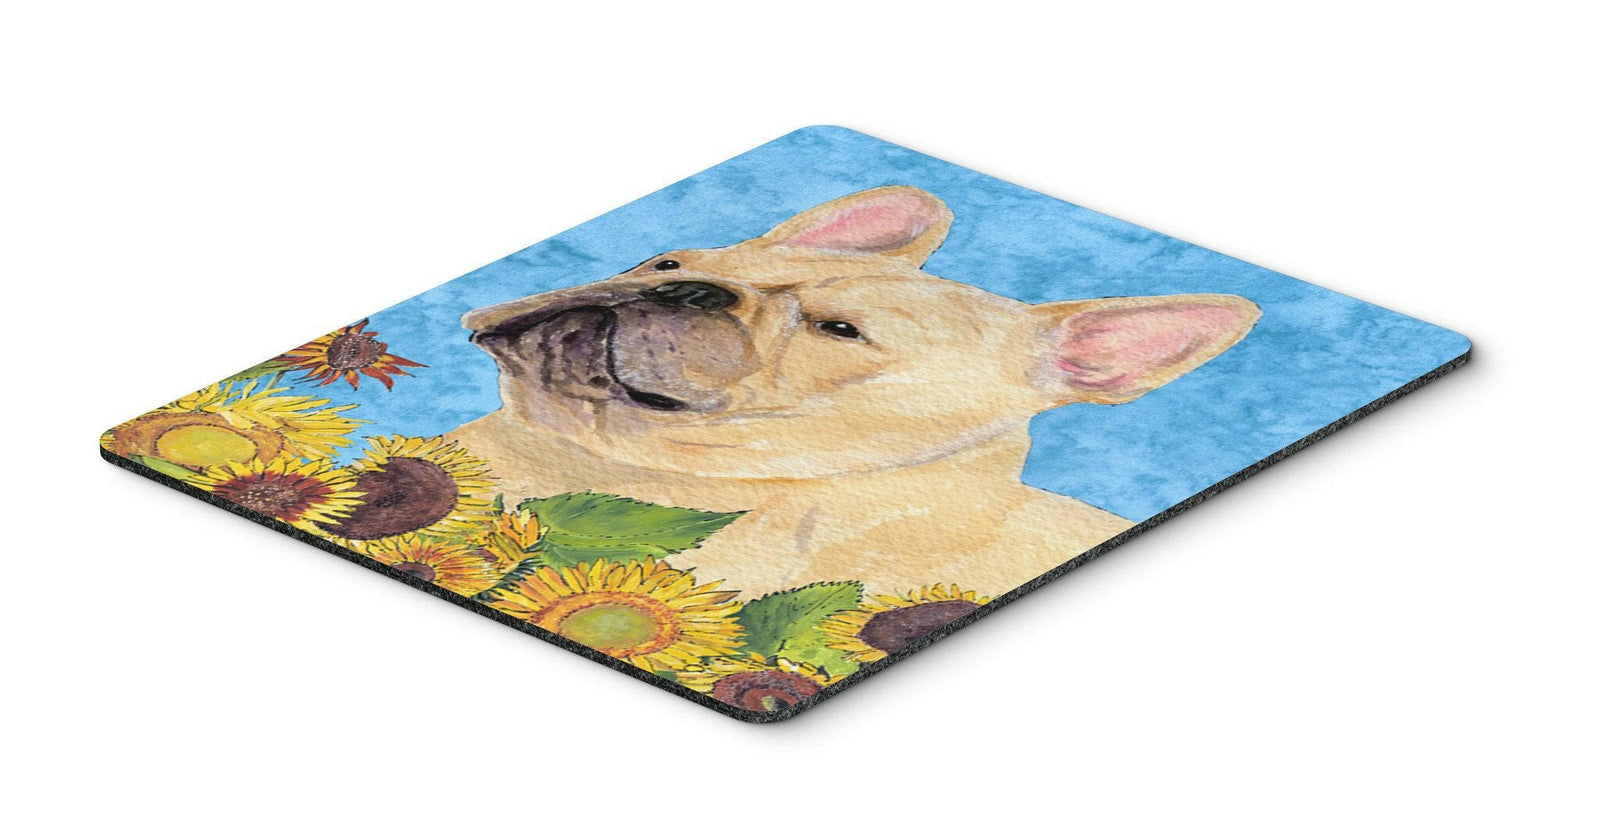 French Bulldog Mouse Pad, Hot Pad or Trivet by Caroline's Treasures